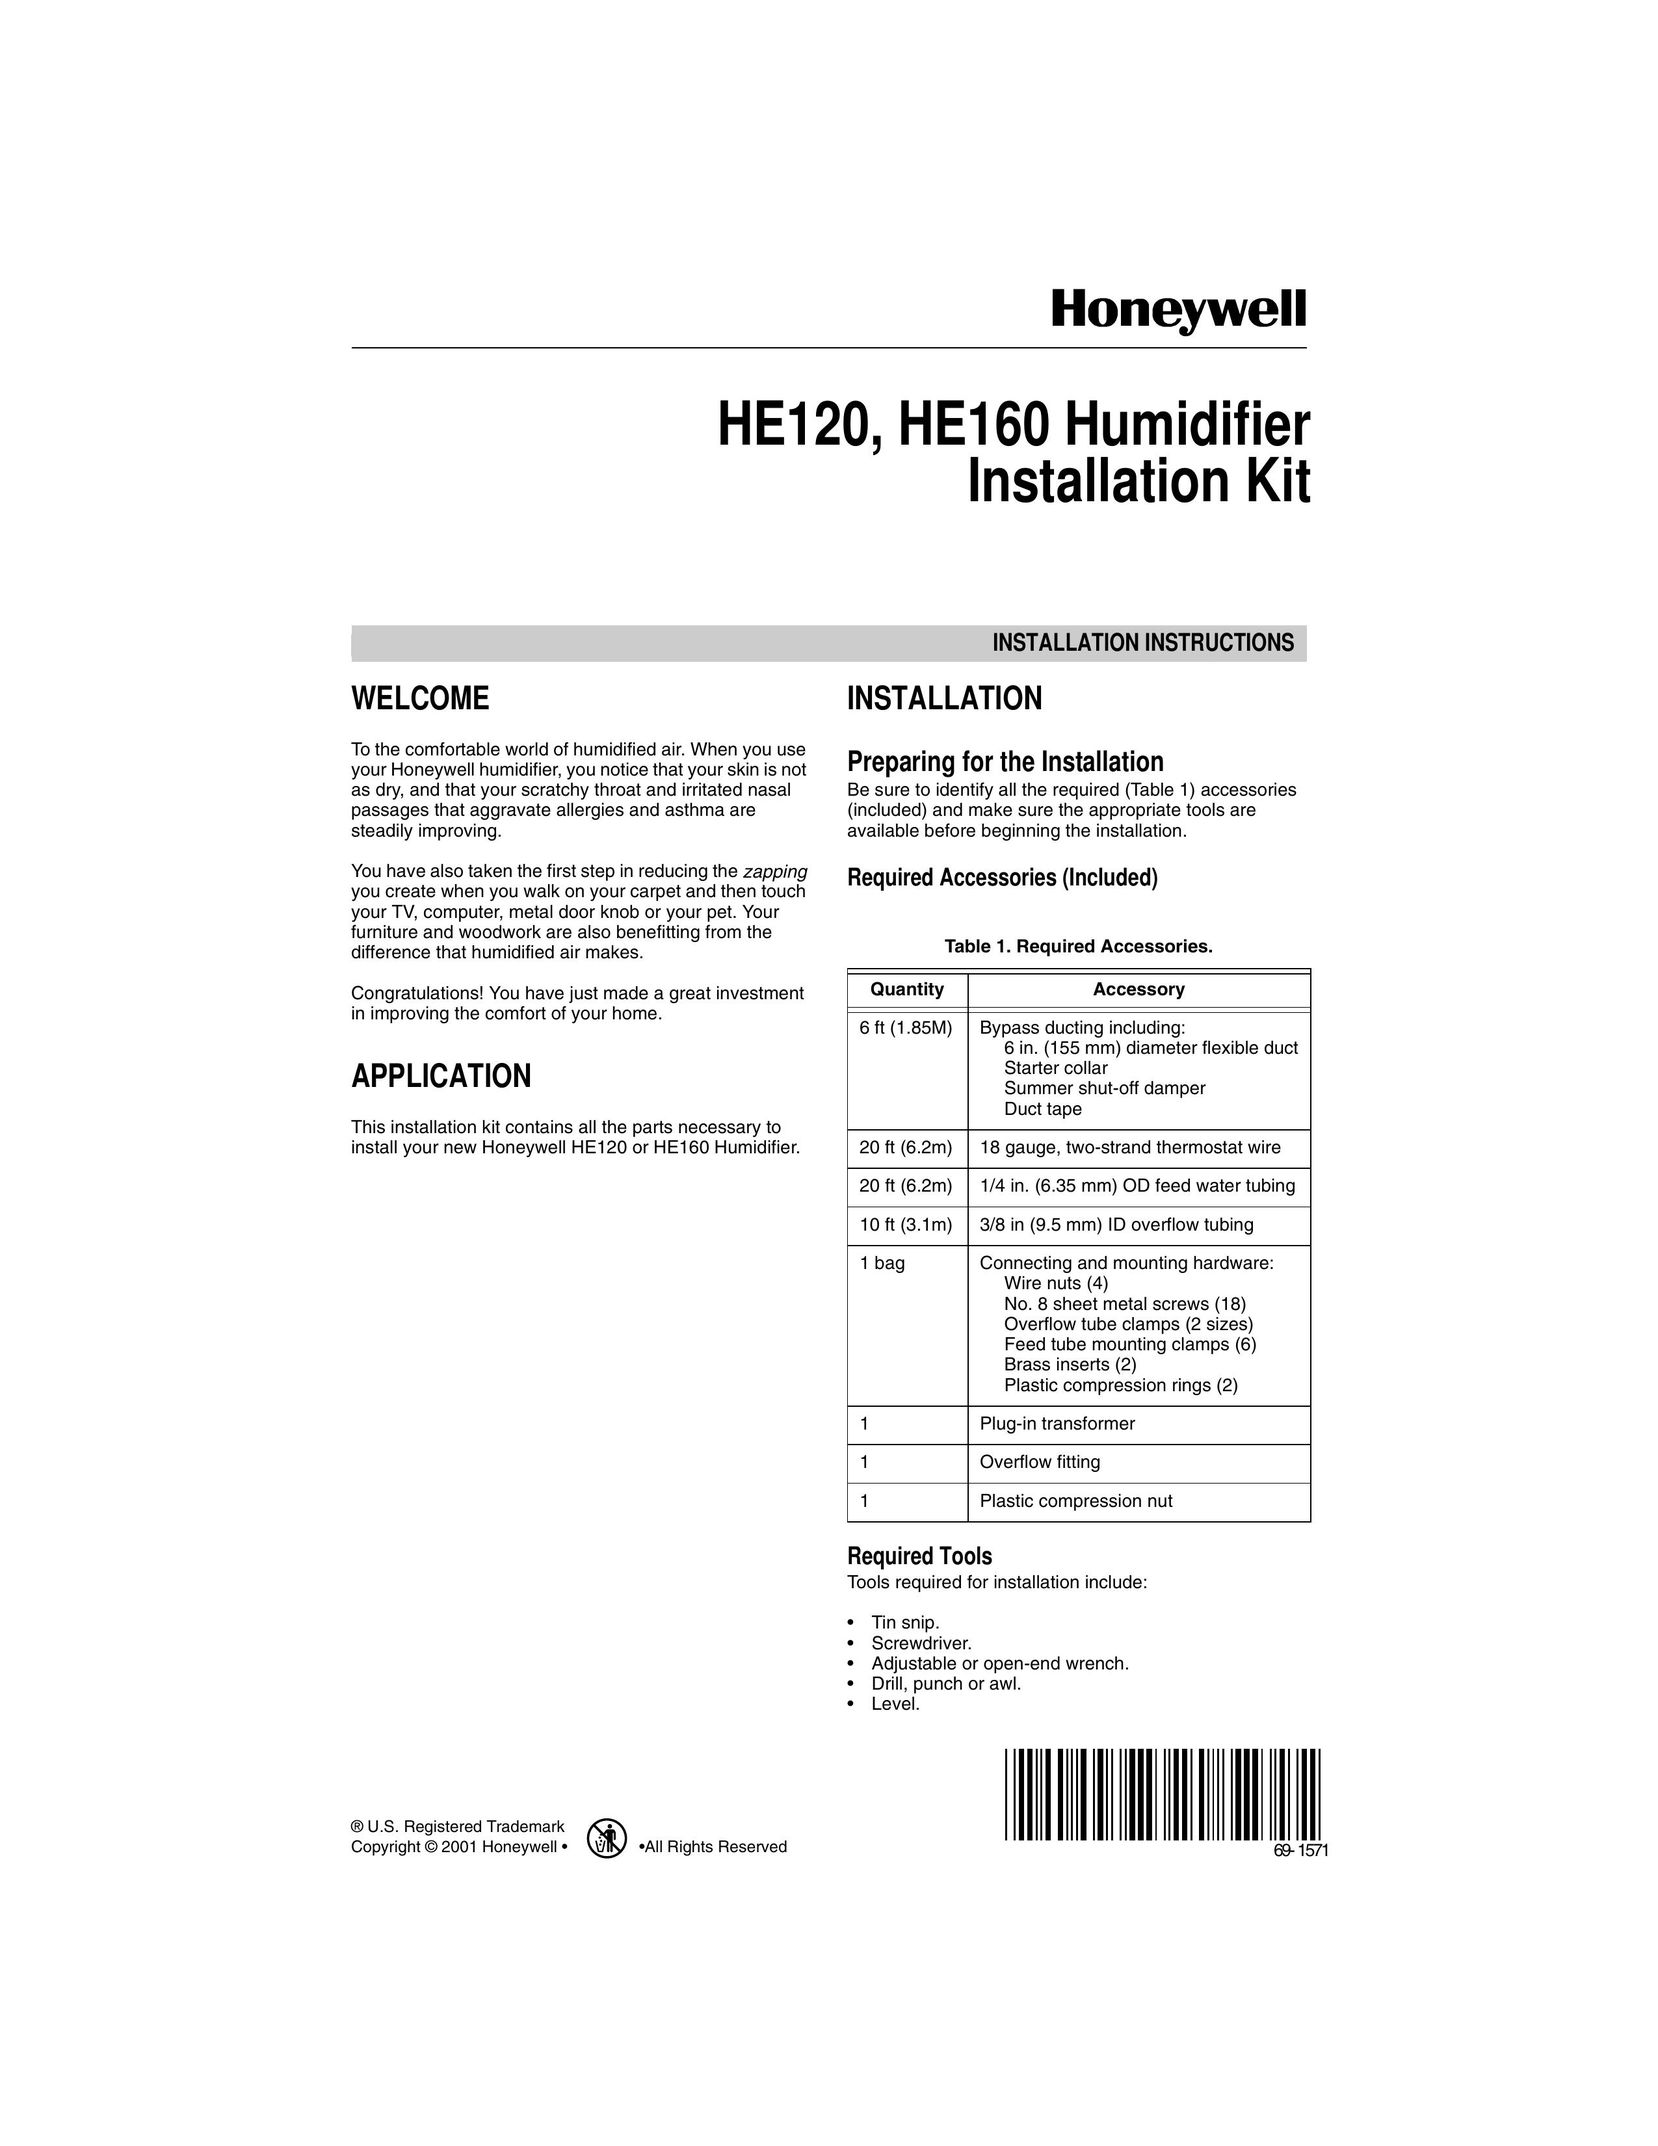 Honeywell HE160 Humidifier User Manual